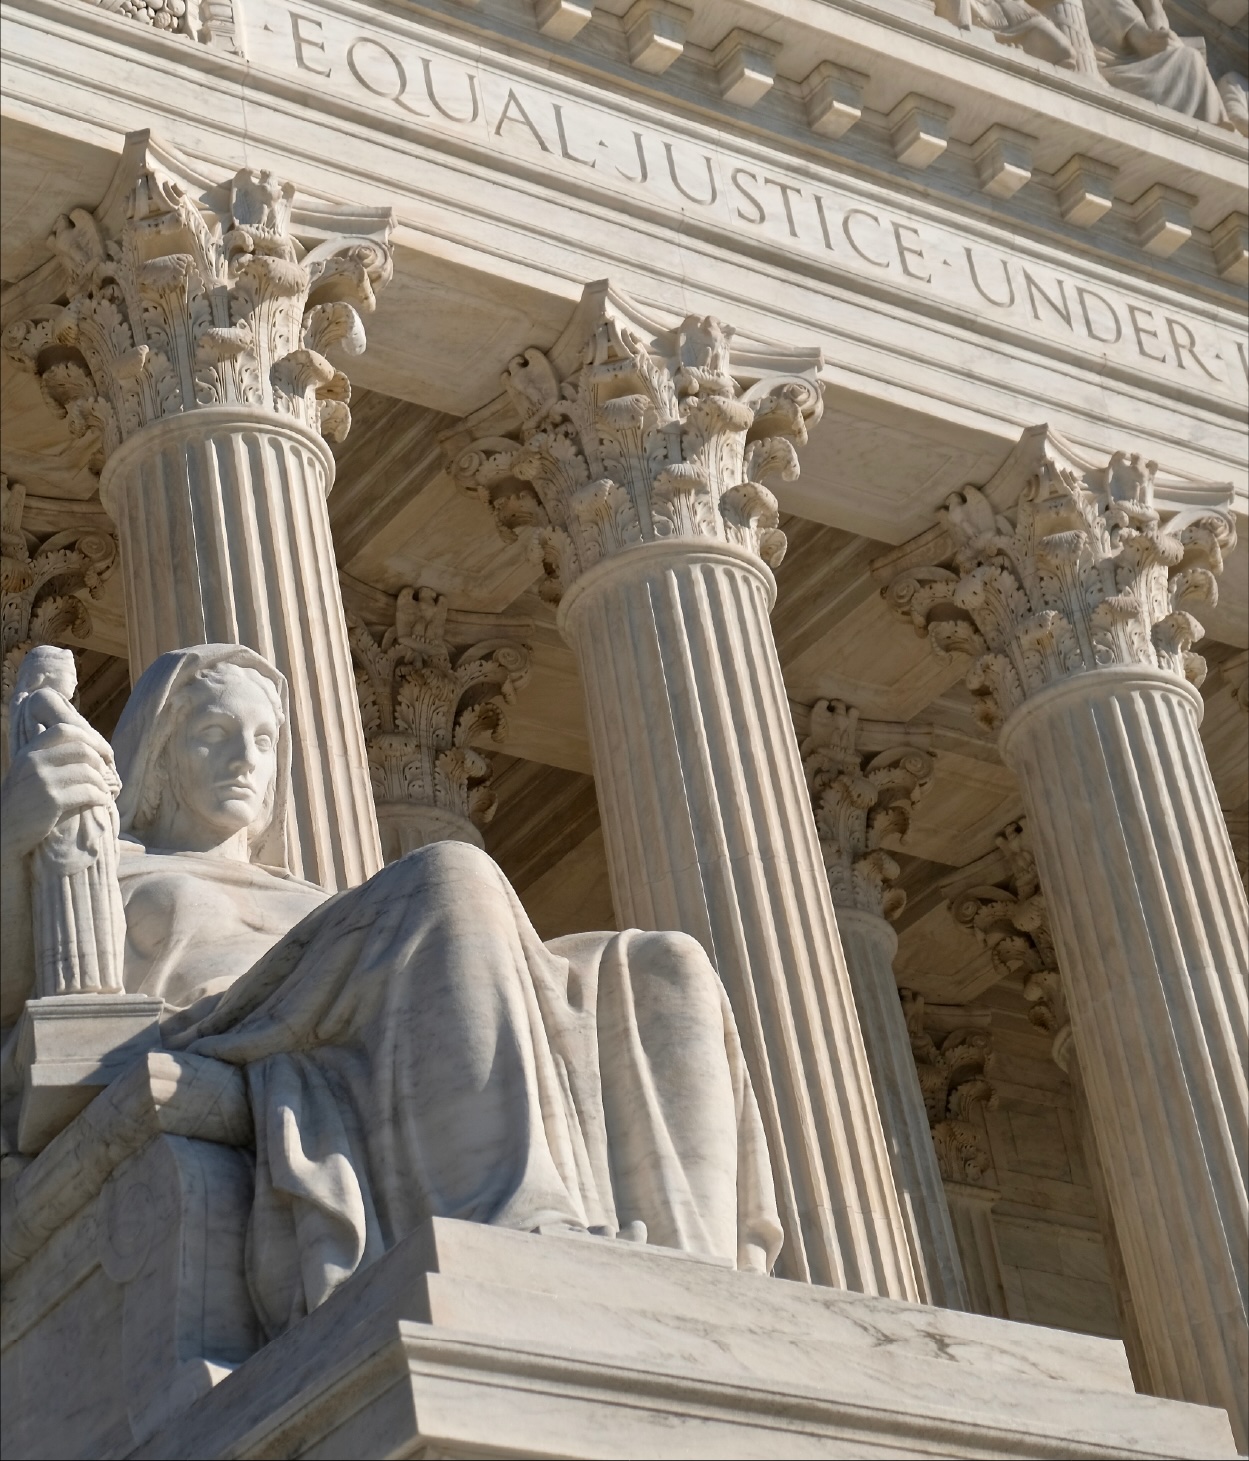 U.S. Supreme Court façade